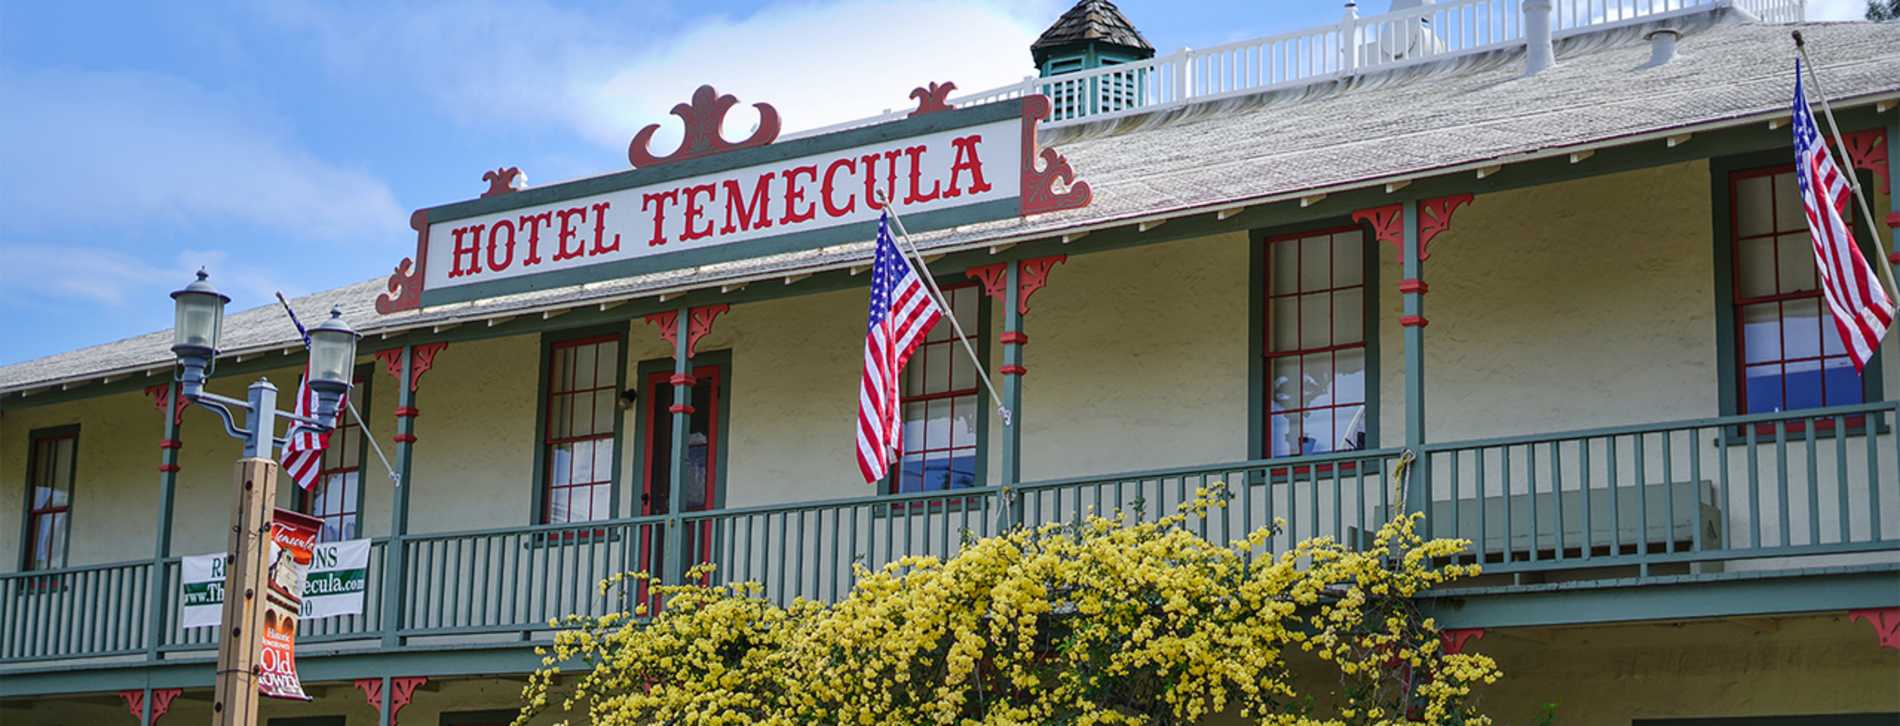 Hotel Temecula